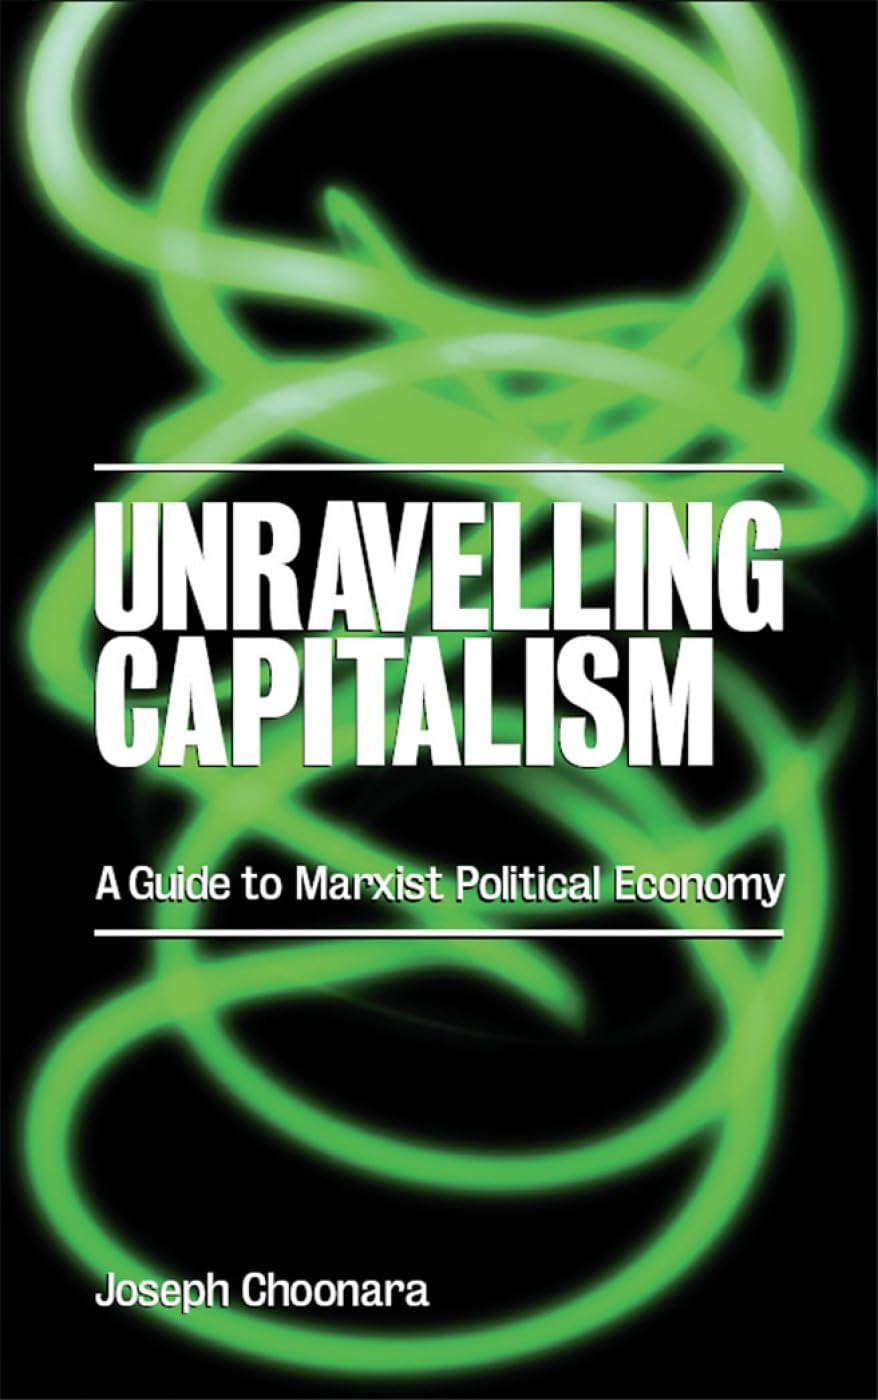 Unravelling Capitalism (Joseph Choonara)